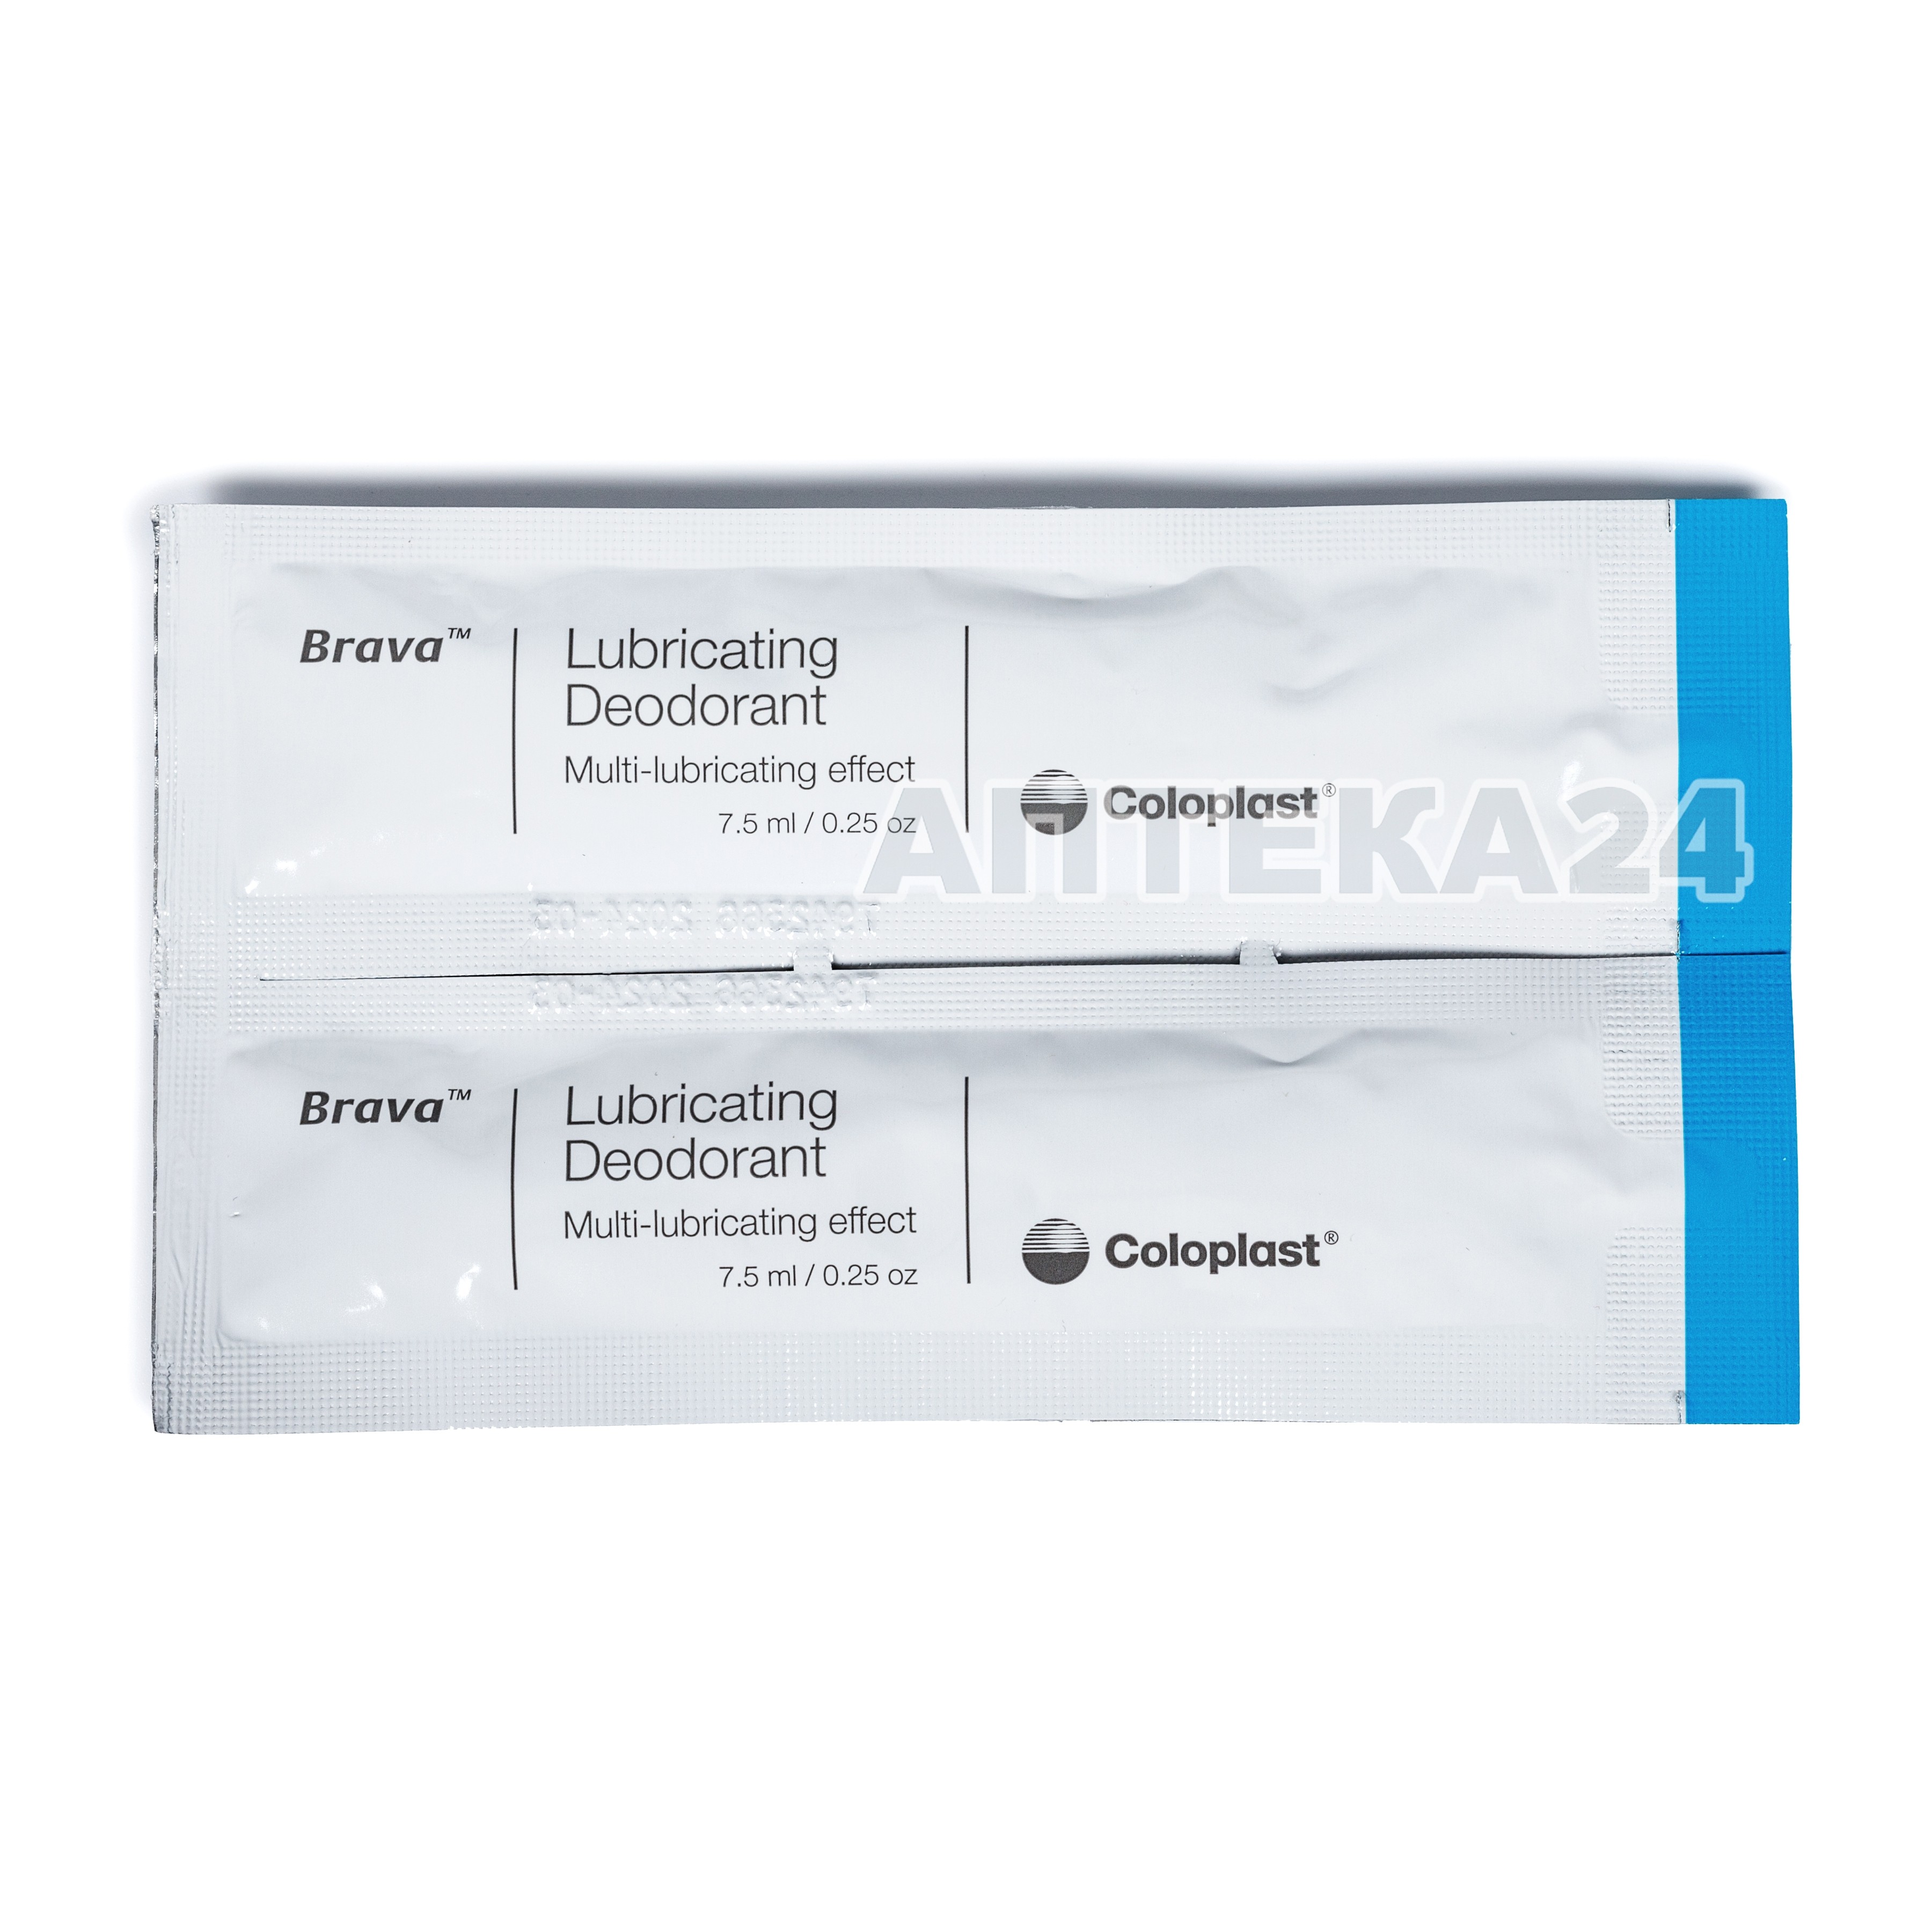 Brava Lubricating Deodorant - Coloplast 12060, 12061